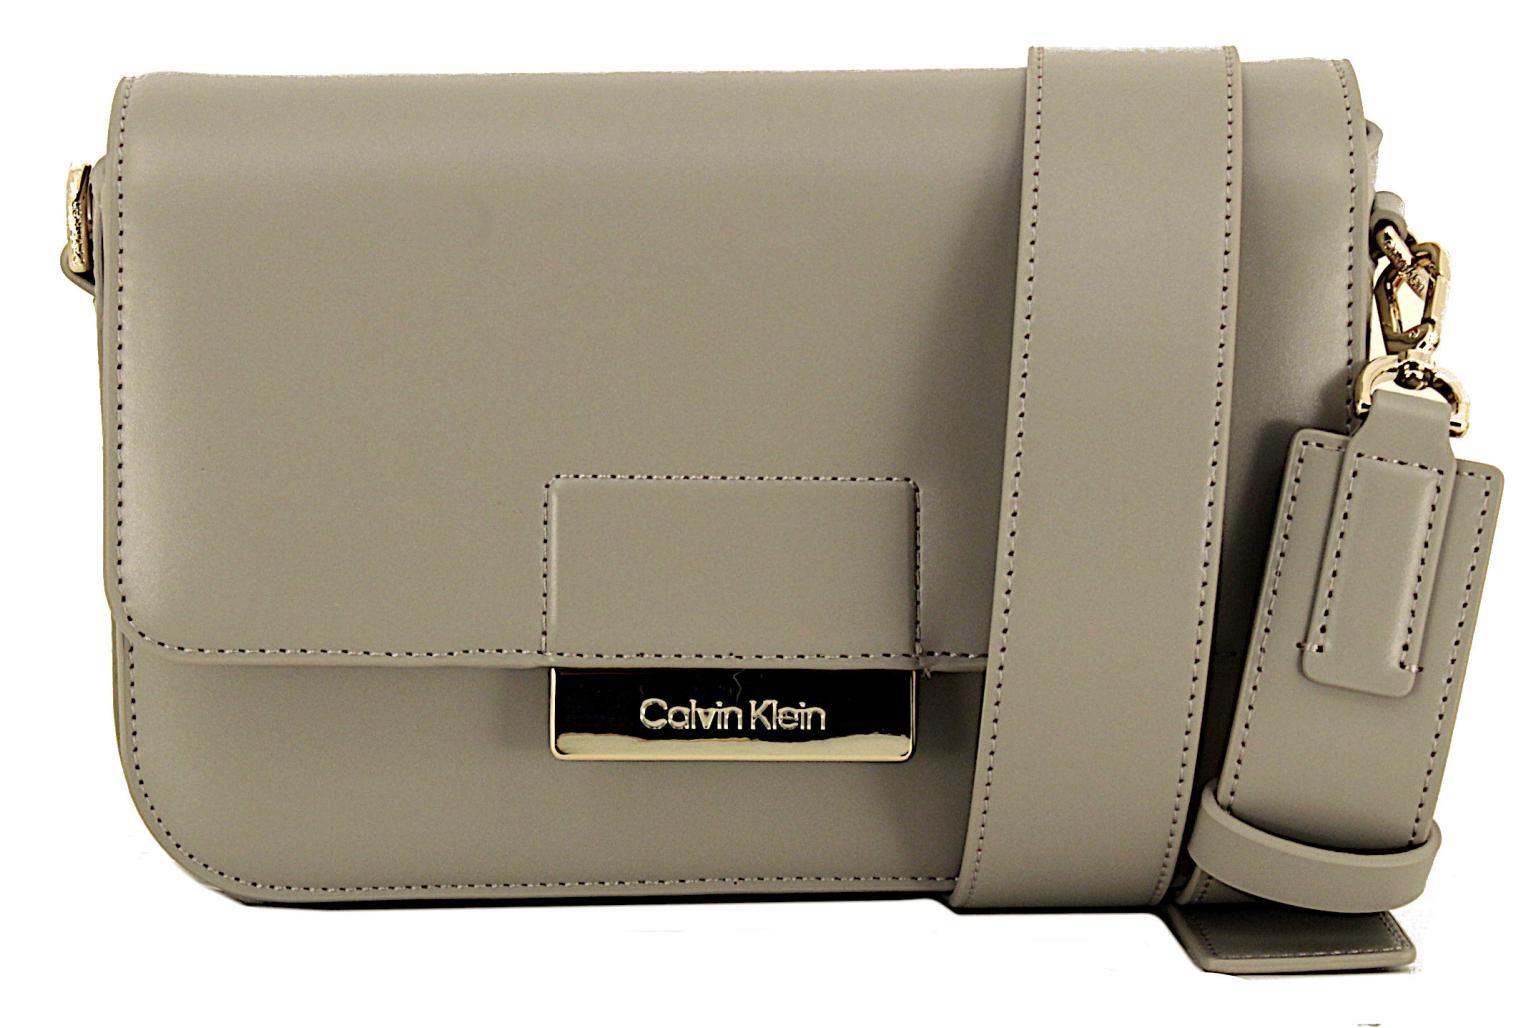 Umhängetasche Calvin Klein Flap Shoulder Bag Vibrant Coral